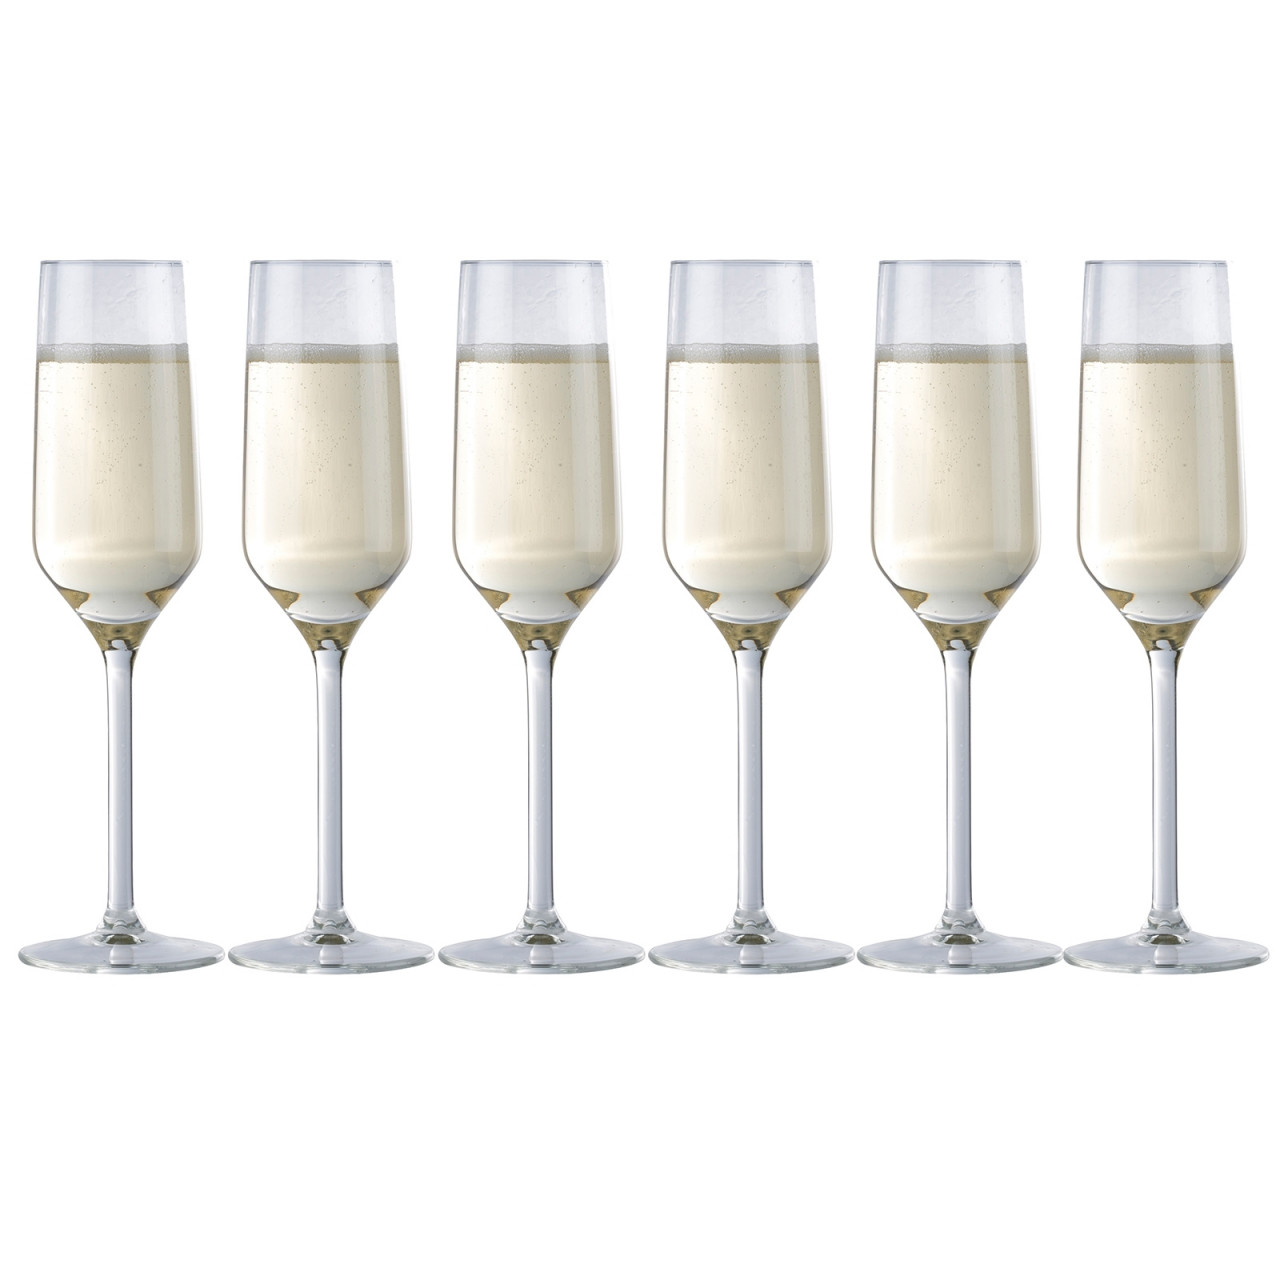 neuetischkultur Champagnerglas 6 St. Sektglas